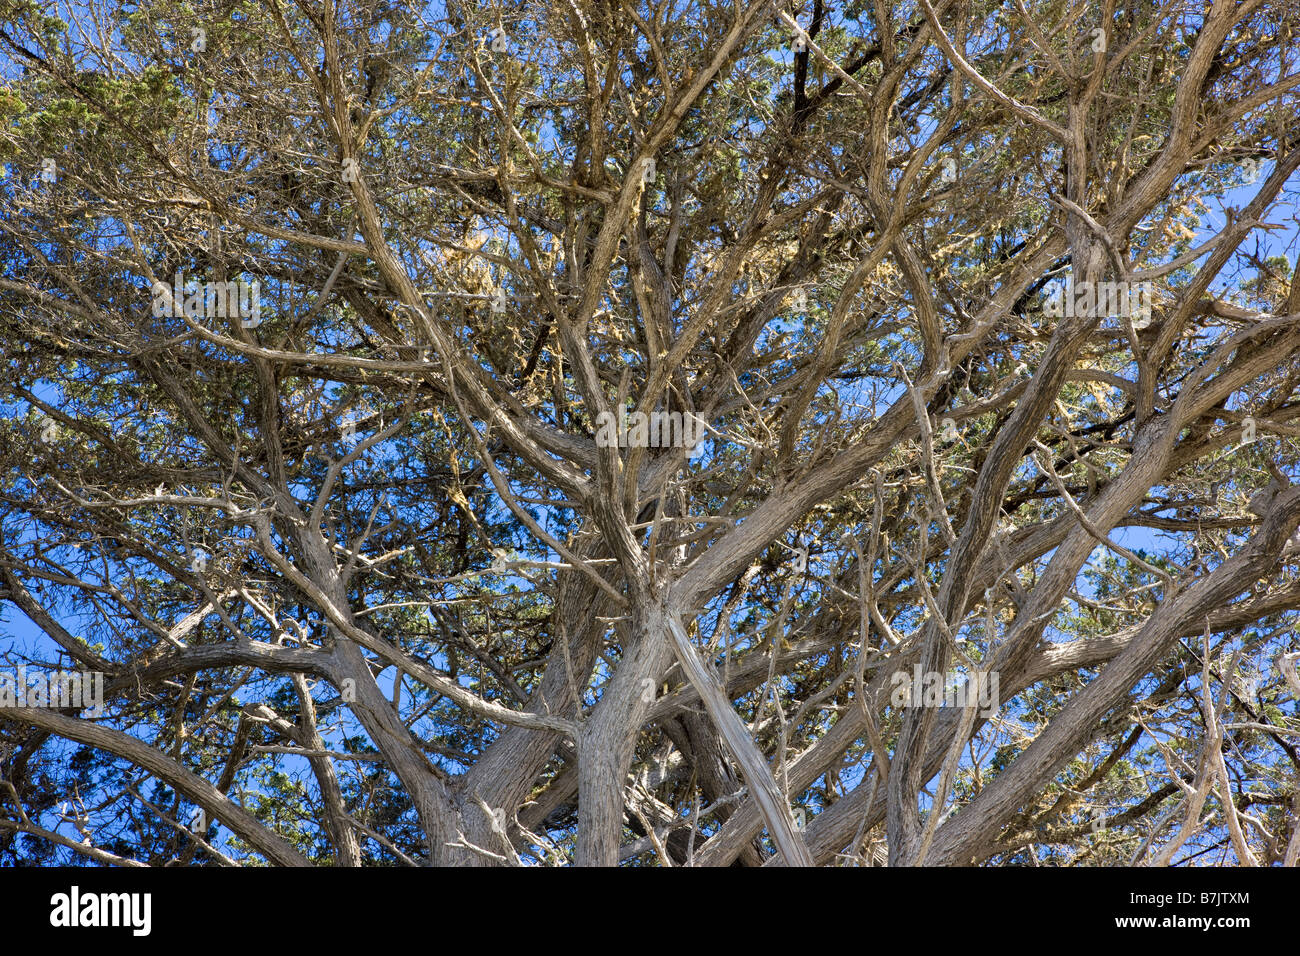 Monterey Cypress tree at Pescadero Point, Pebble Beach, Del Monte Forest, Monterey Peninsula, California, USA Stock Photo